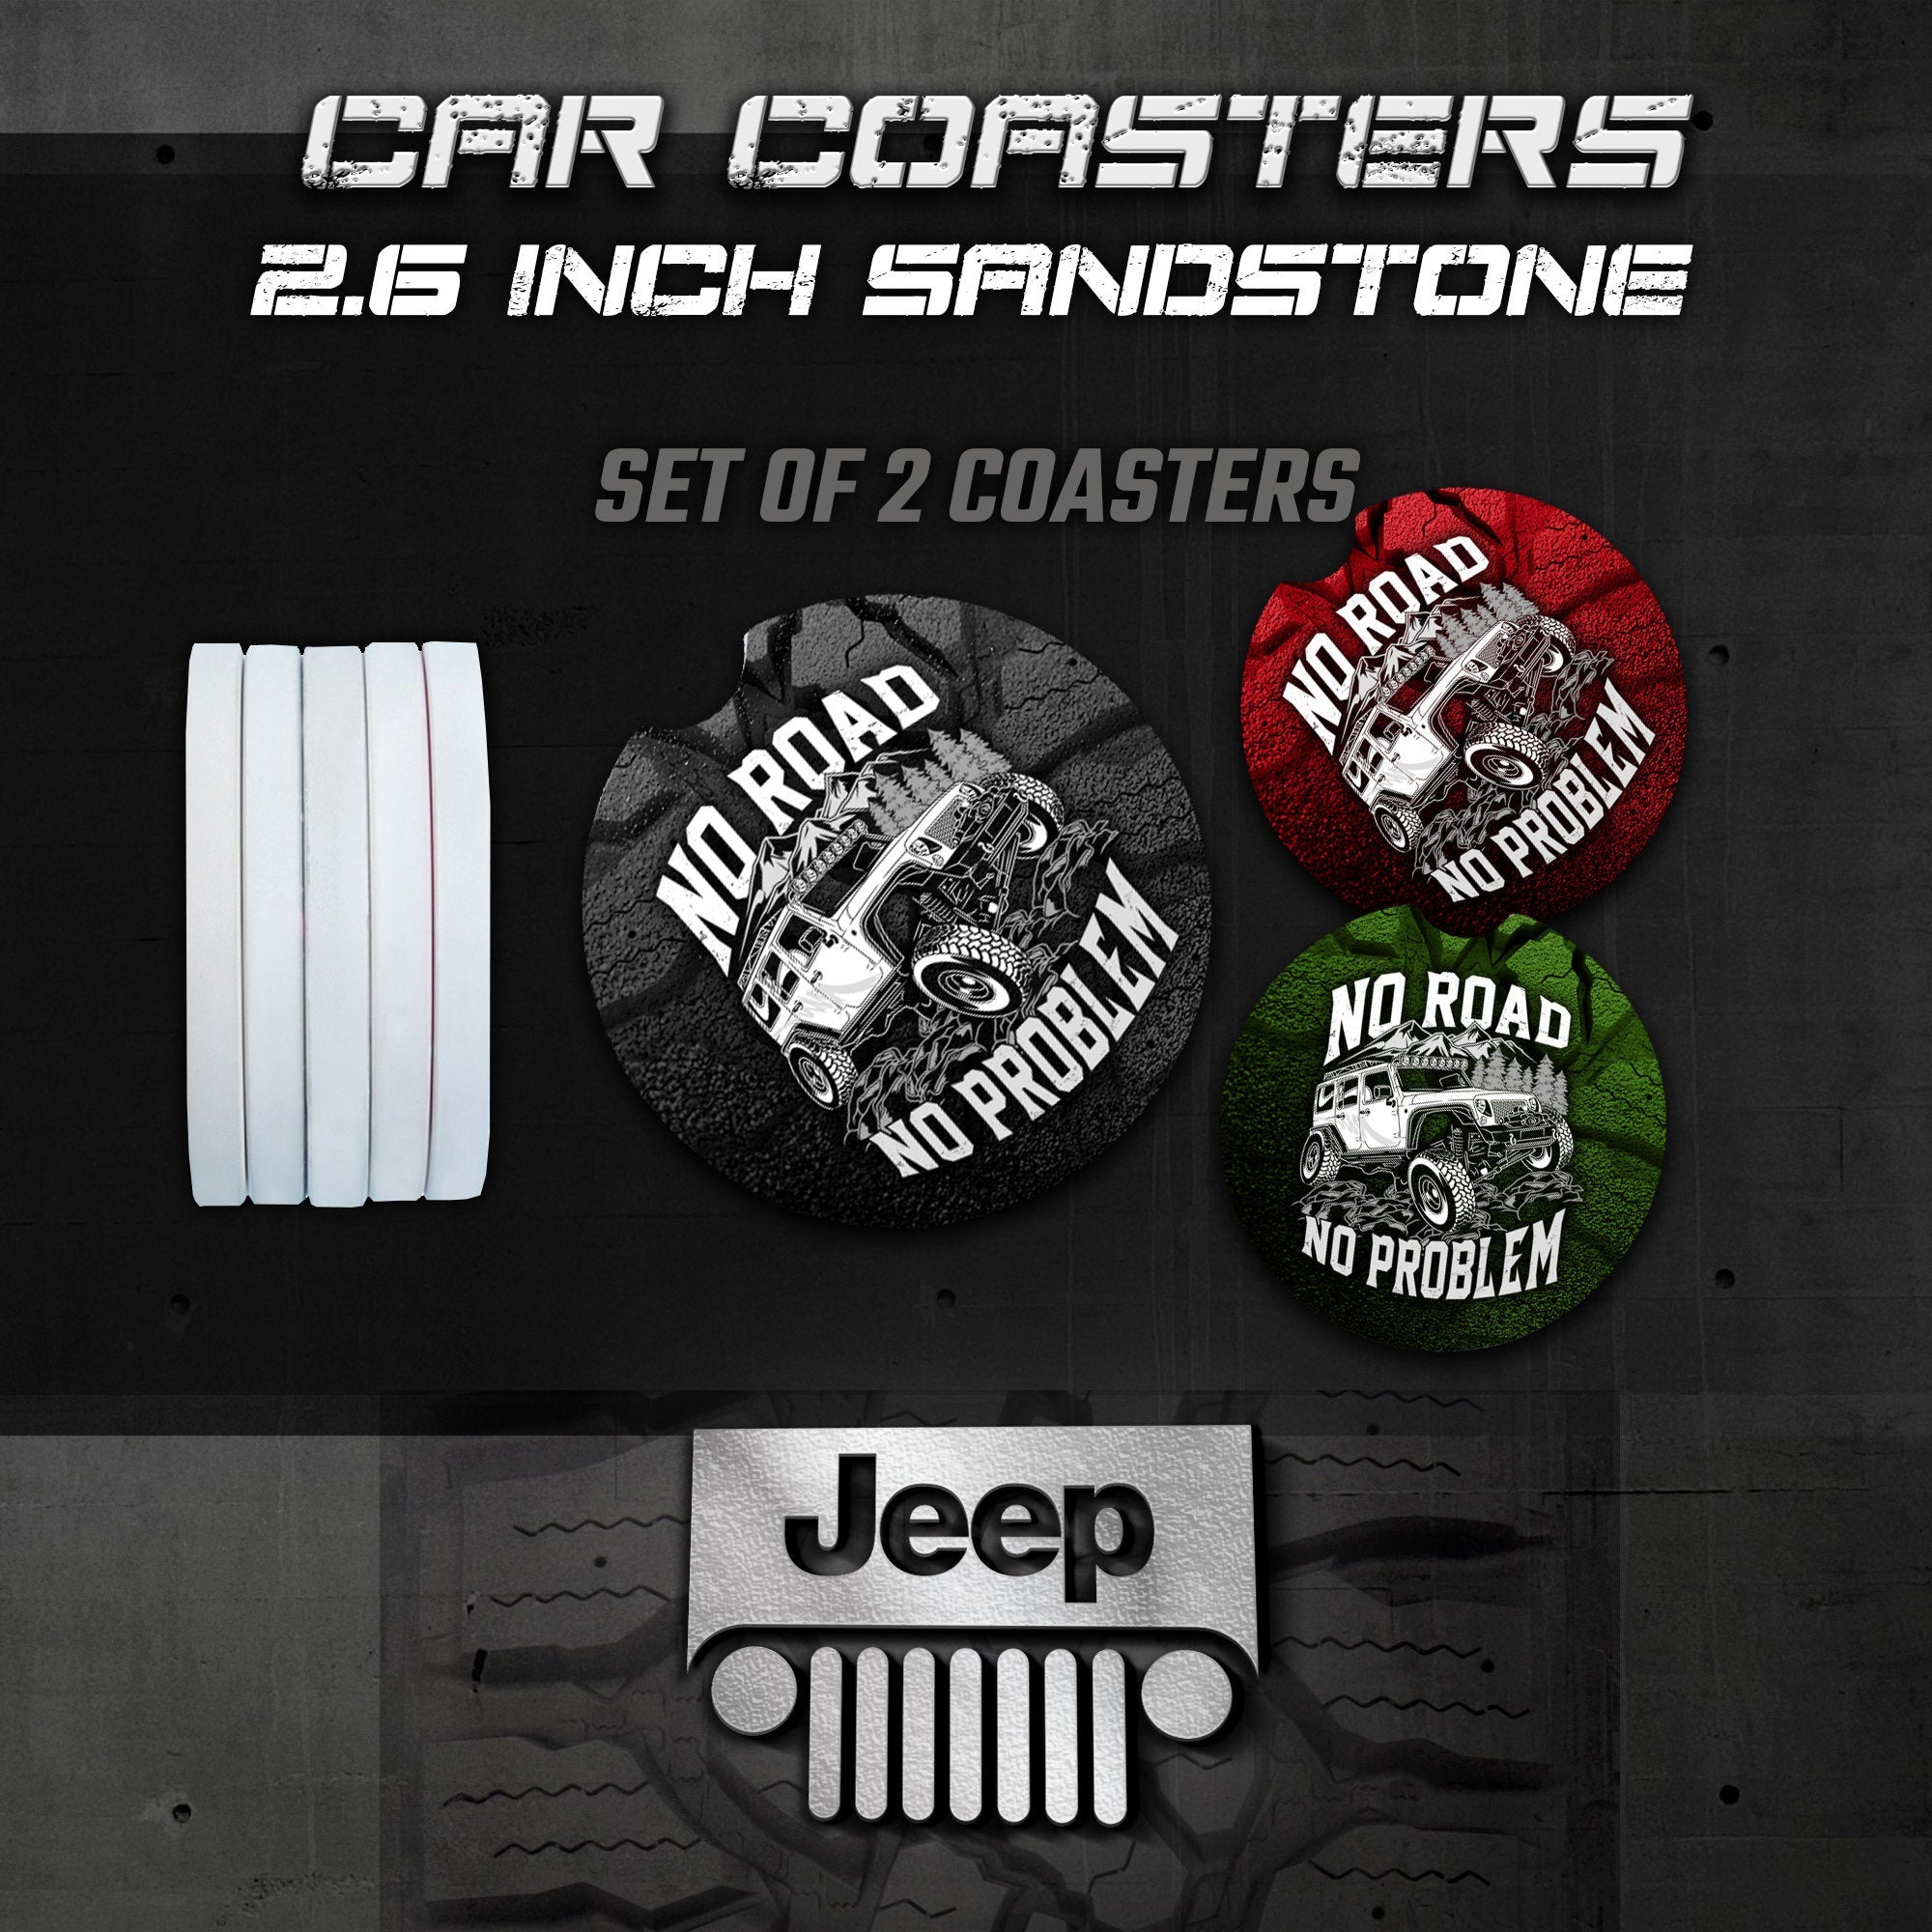 Jeep Car Coasters, Wrangler Car Coasters, Jeep Sandstone Car Coasters, Jeep Accessories